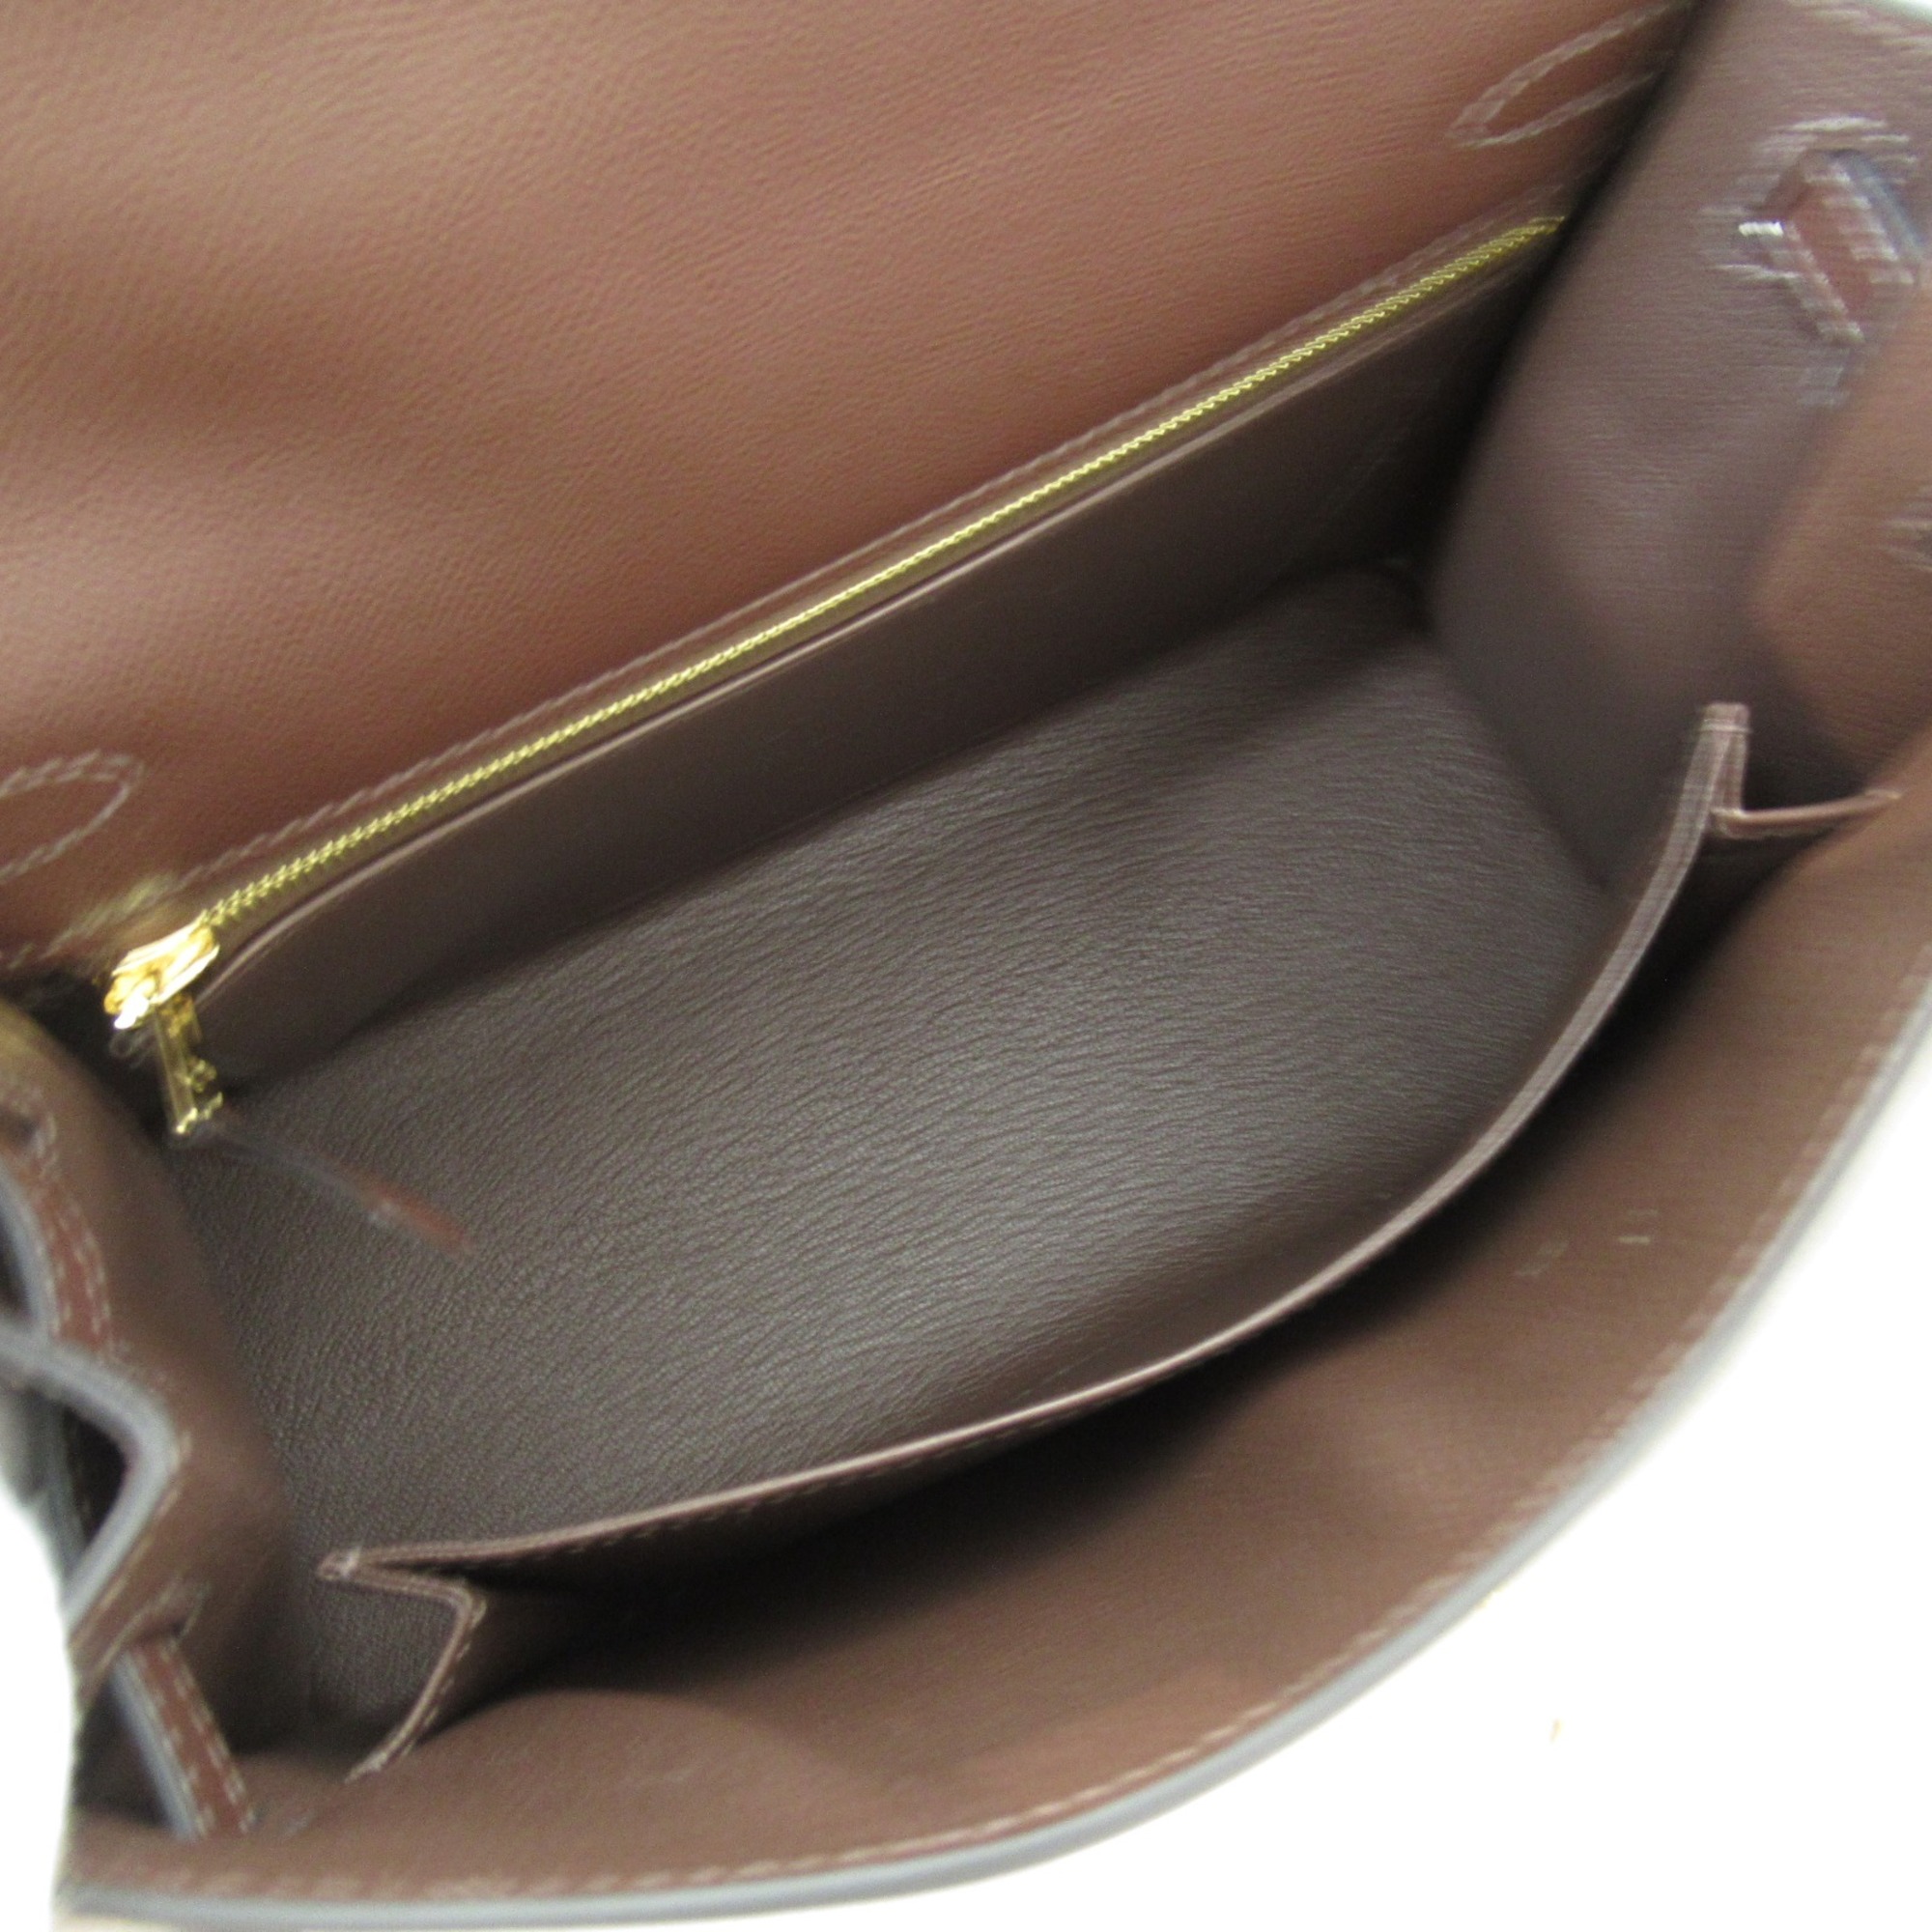 HERMES Kelly 25 handbag outside sewing Brown Moka Vaugham leather